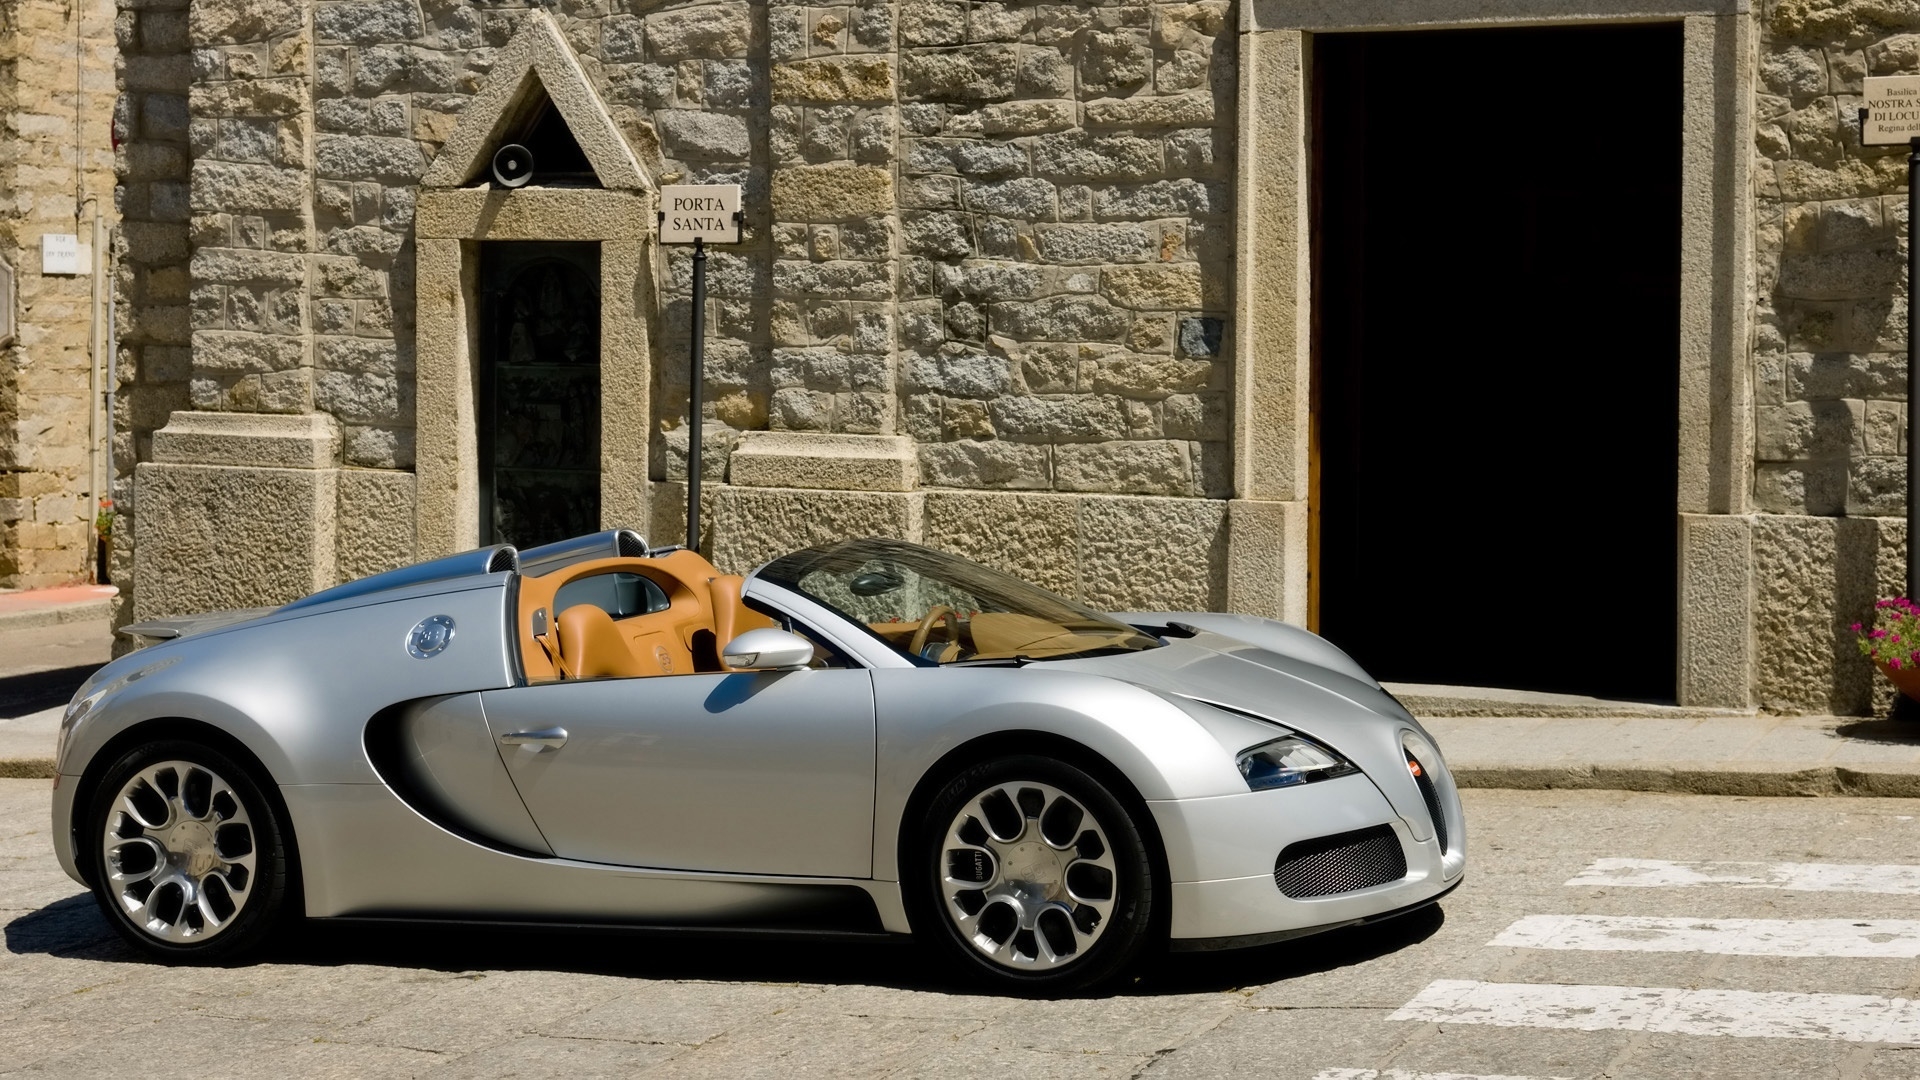 Bugatti Veyron 16.4 Grand Sport 2010 in Sardinia - Side 3 for 1920 x 1080 HDTV 1080p resolution